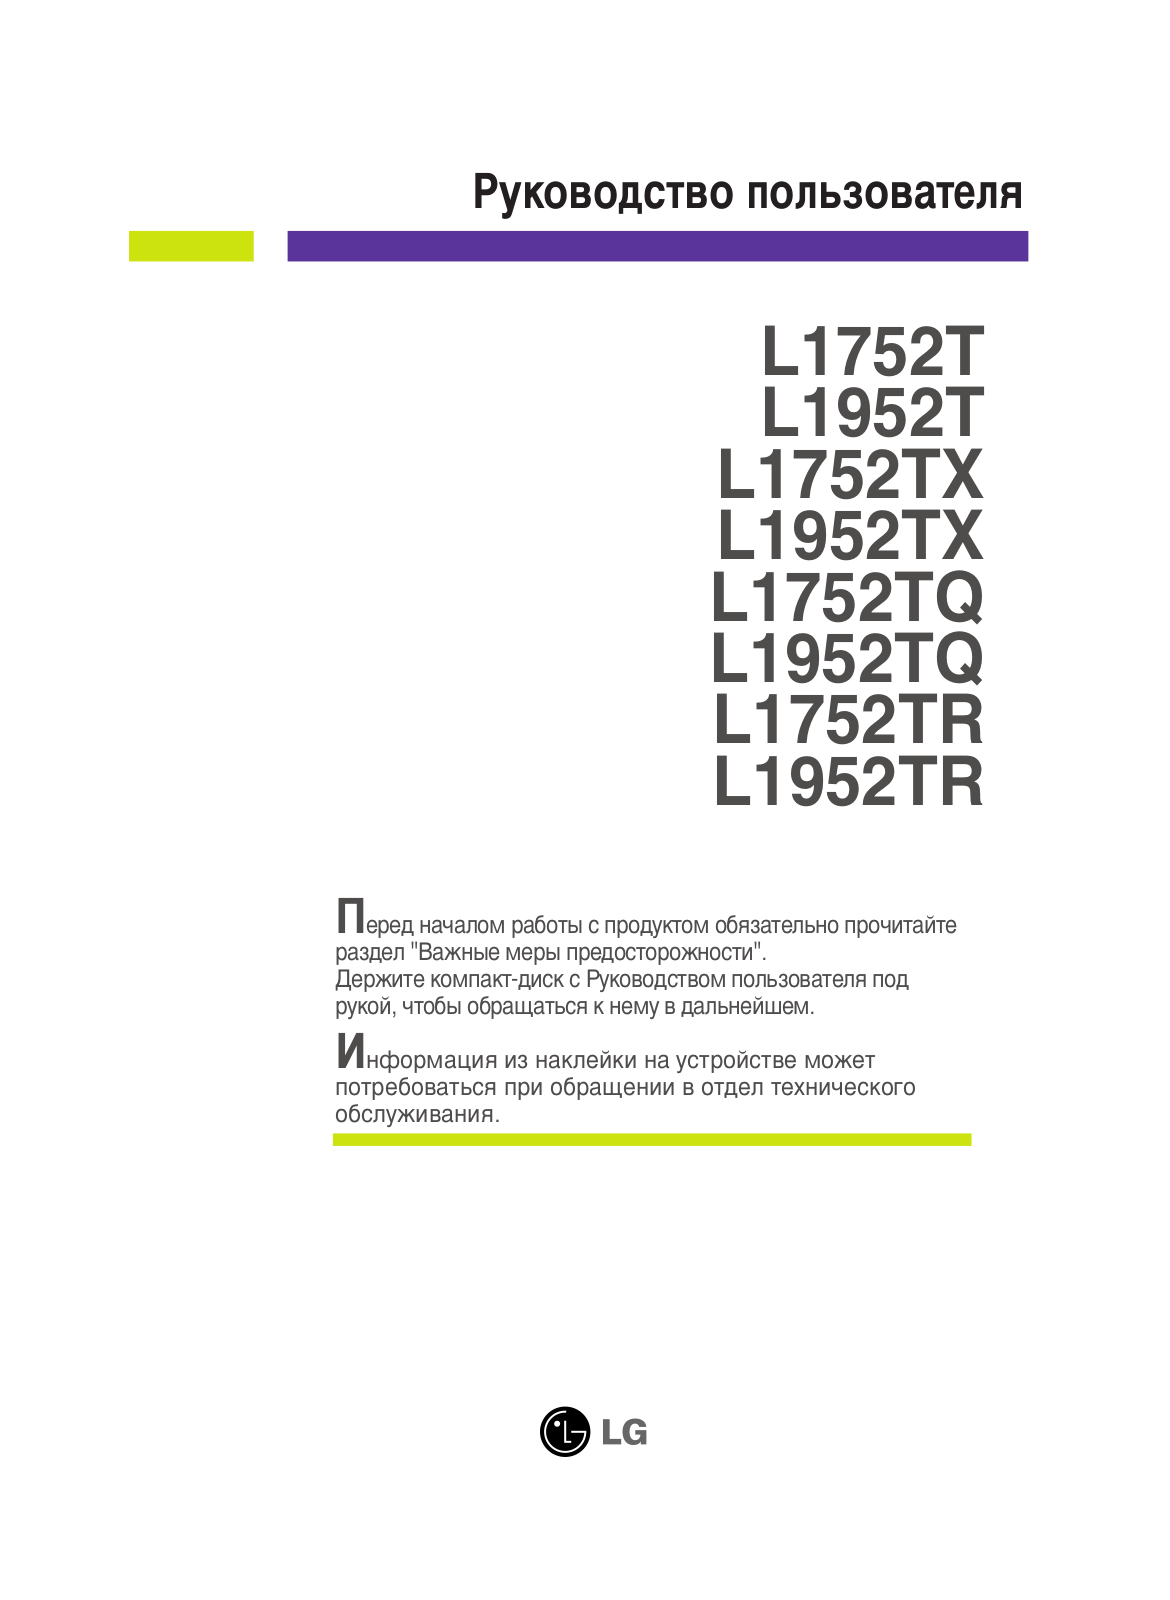 LG Flatron L1952S User Manual